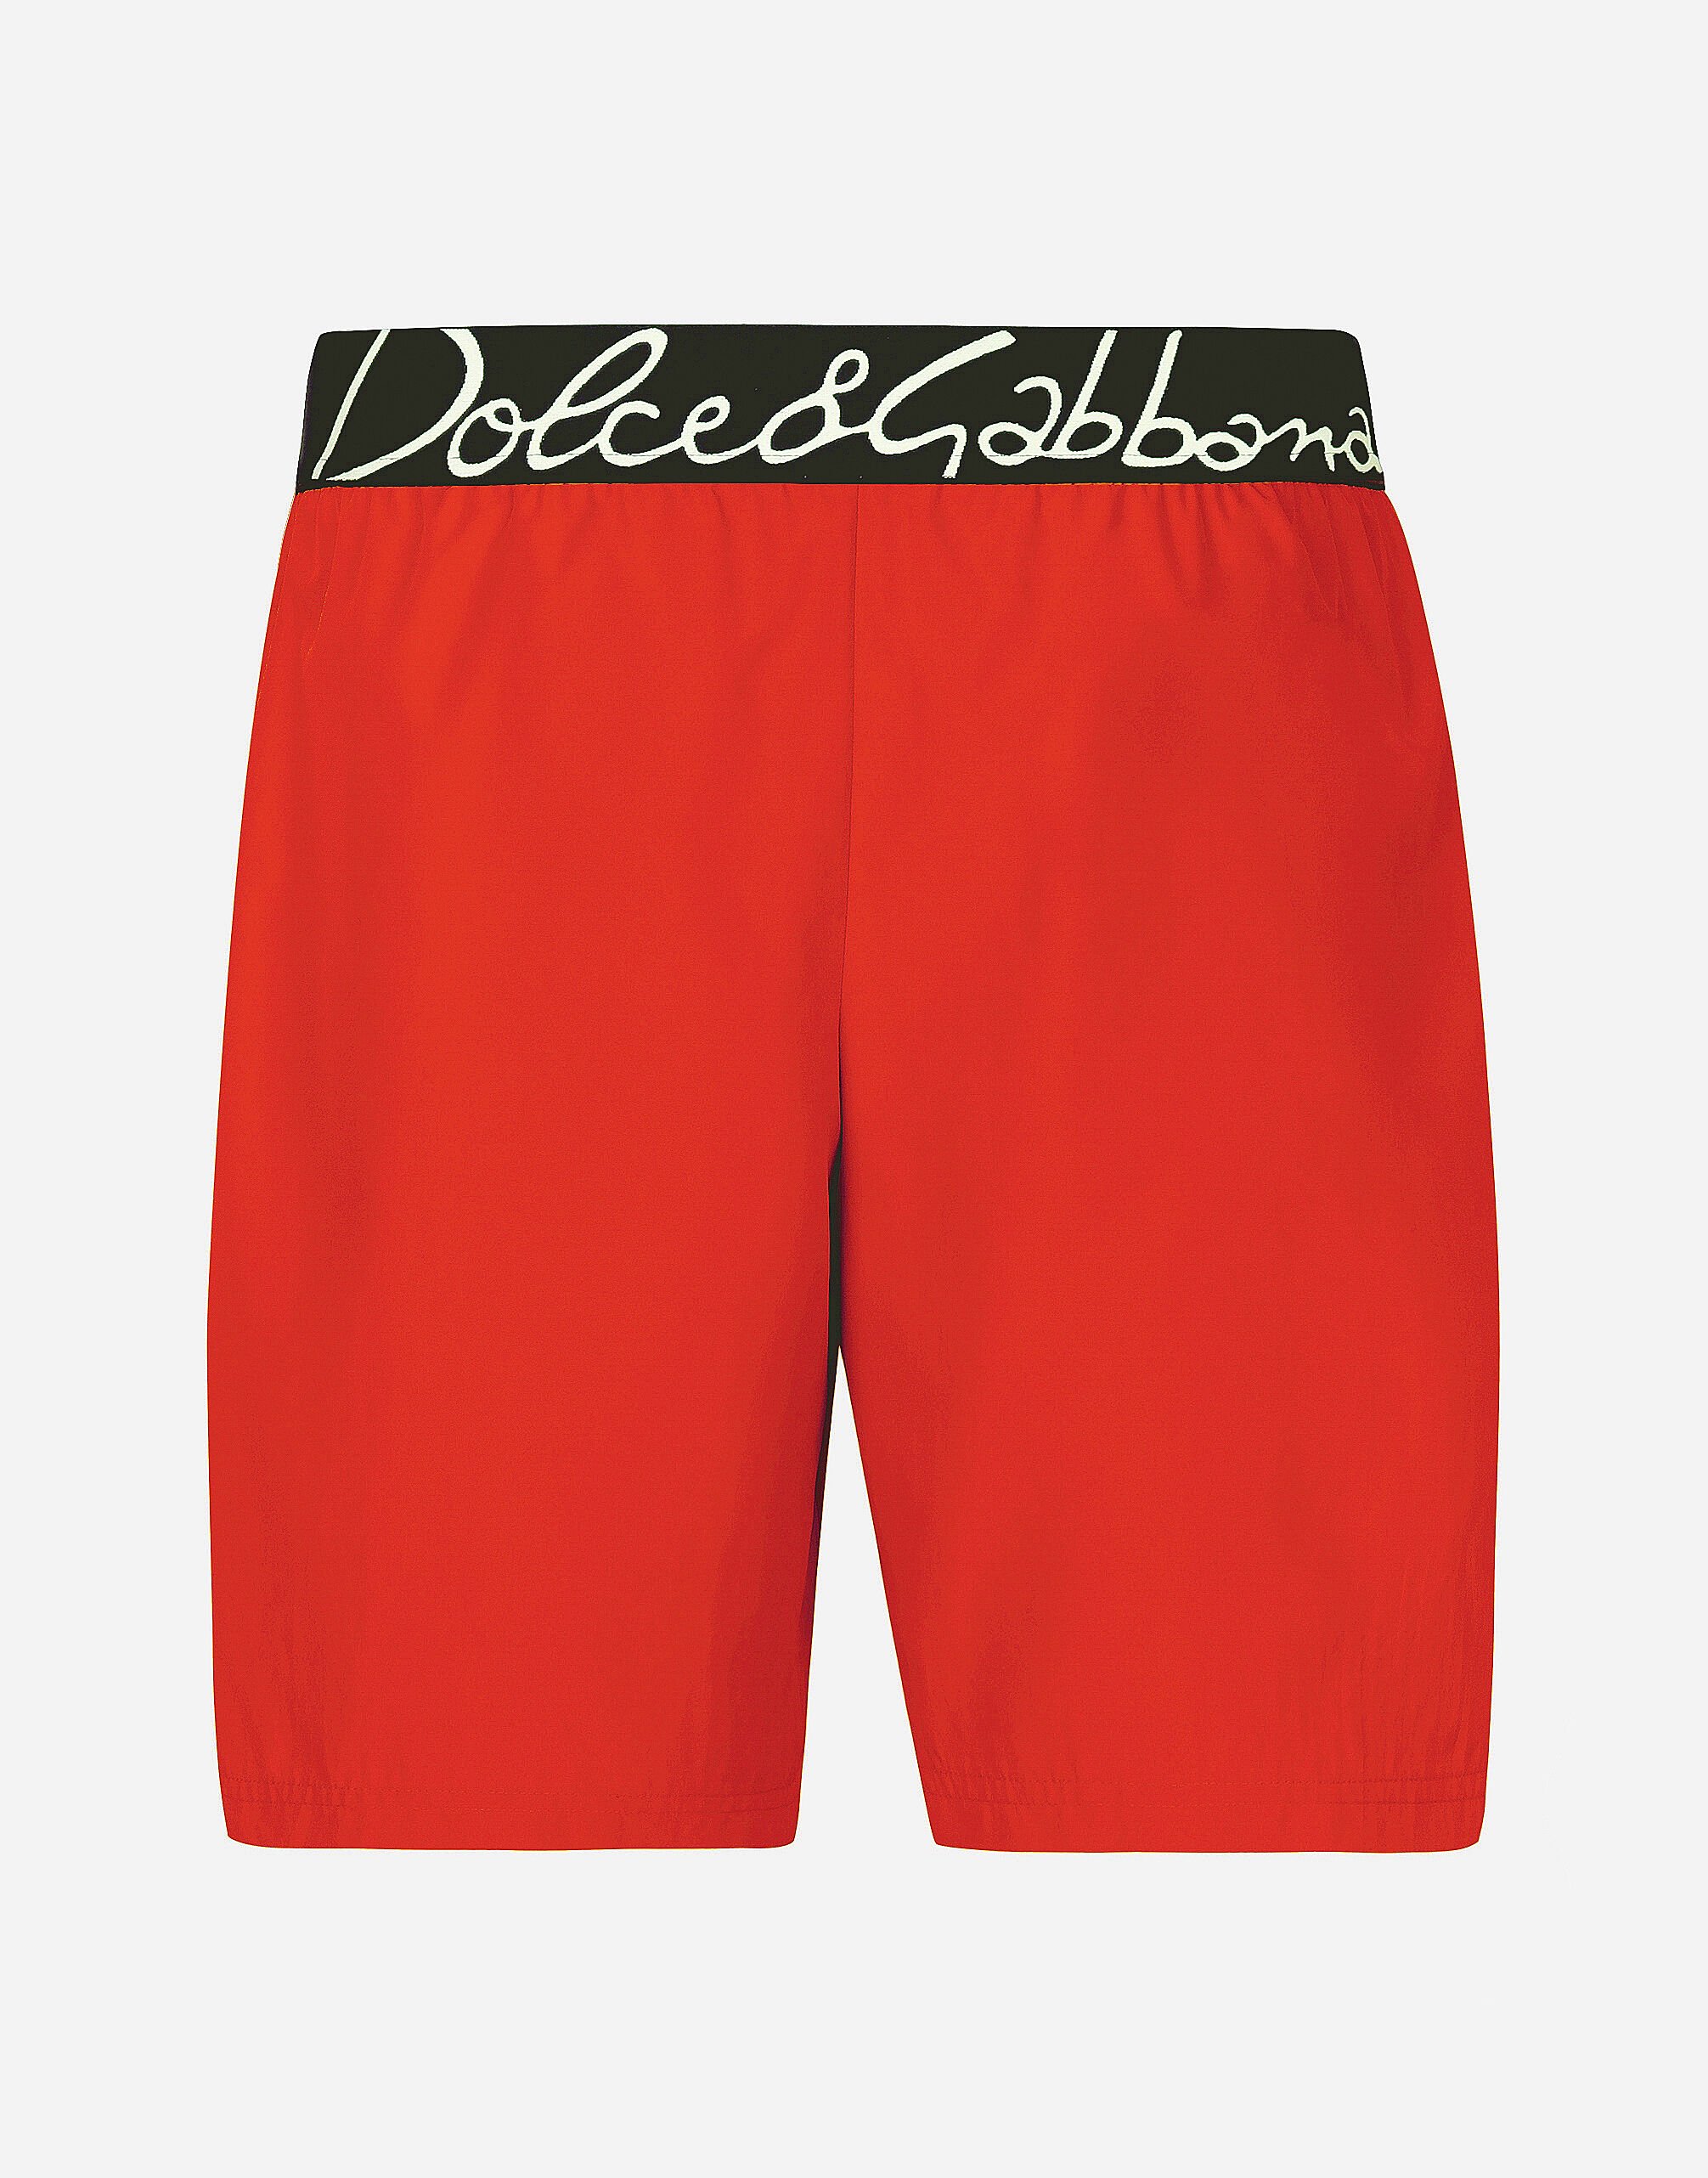 Dolce & Gabbana شورت سباحة متوسط الطول بشعار Dolce&Gabbana مطبعة M4A13TFIM4R